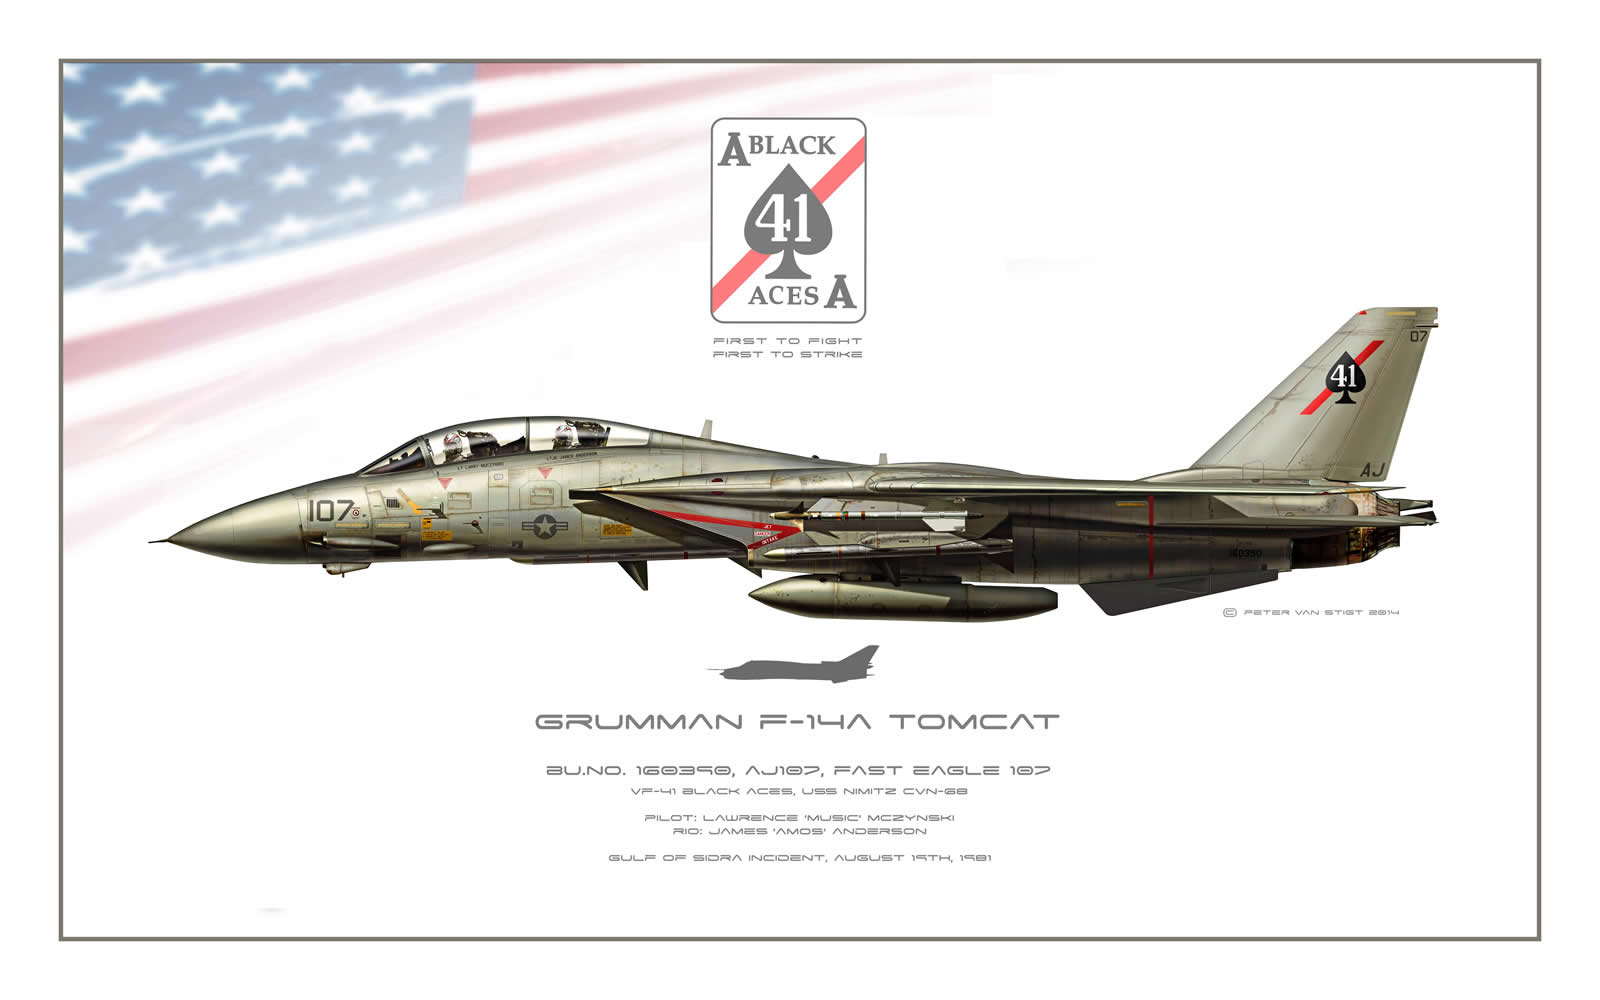 VF-41 Black Aces Fast Eagle F-14 Tomcat Profile